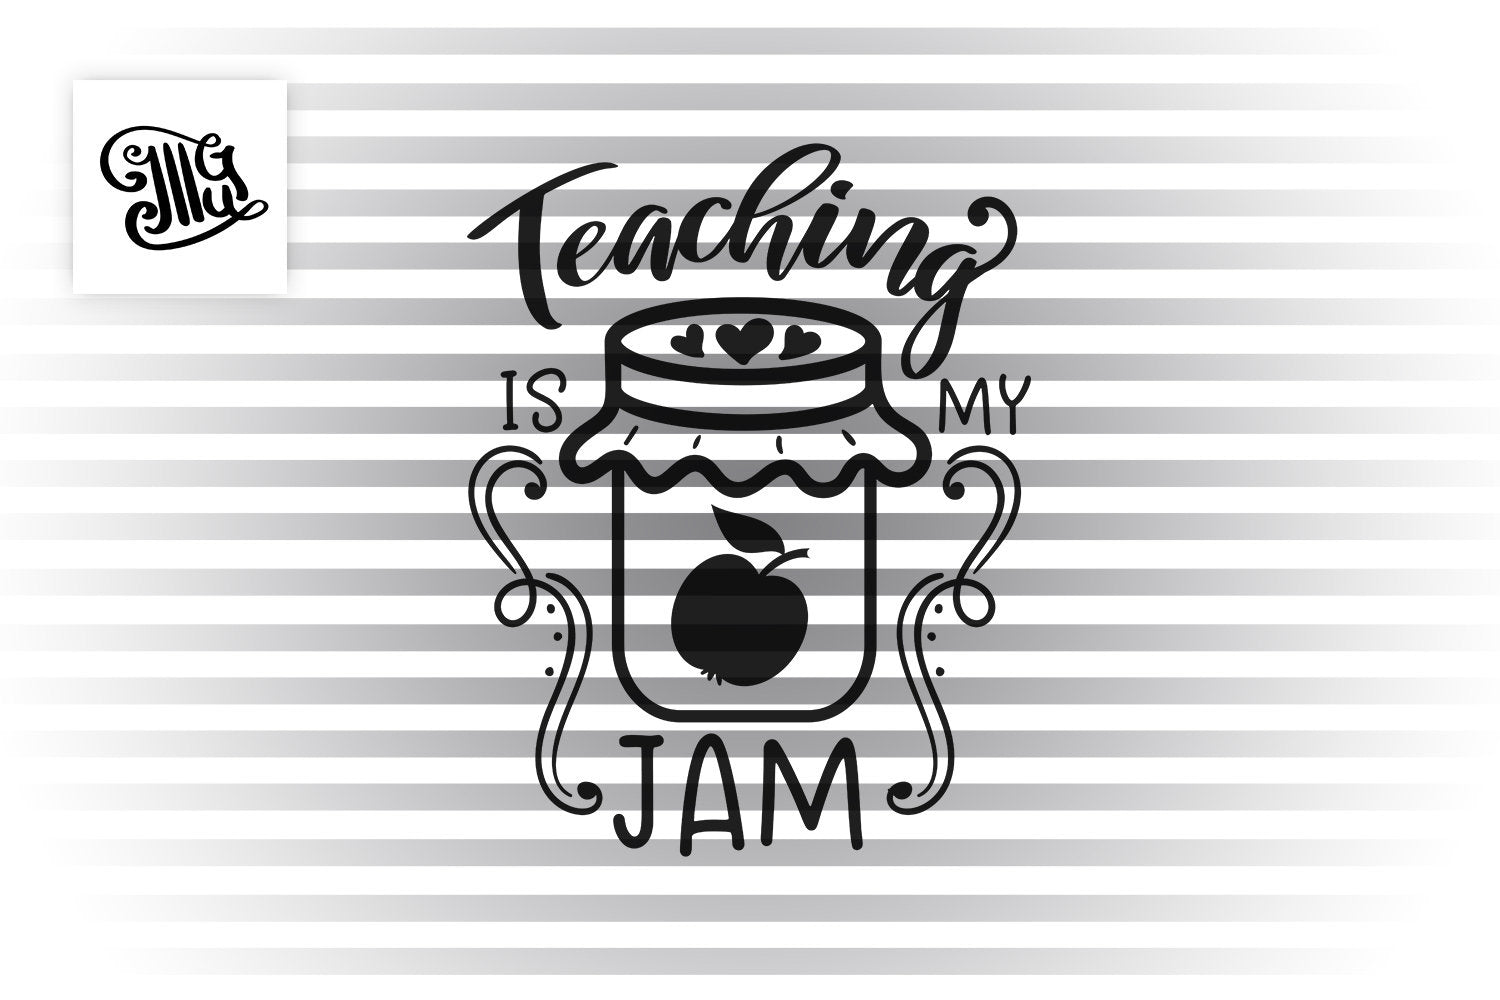 Download Teaching Is My Jam Svg Teacher Shirt Svg First Day Of School Svg Te Illustrator Guru